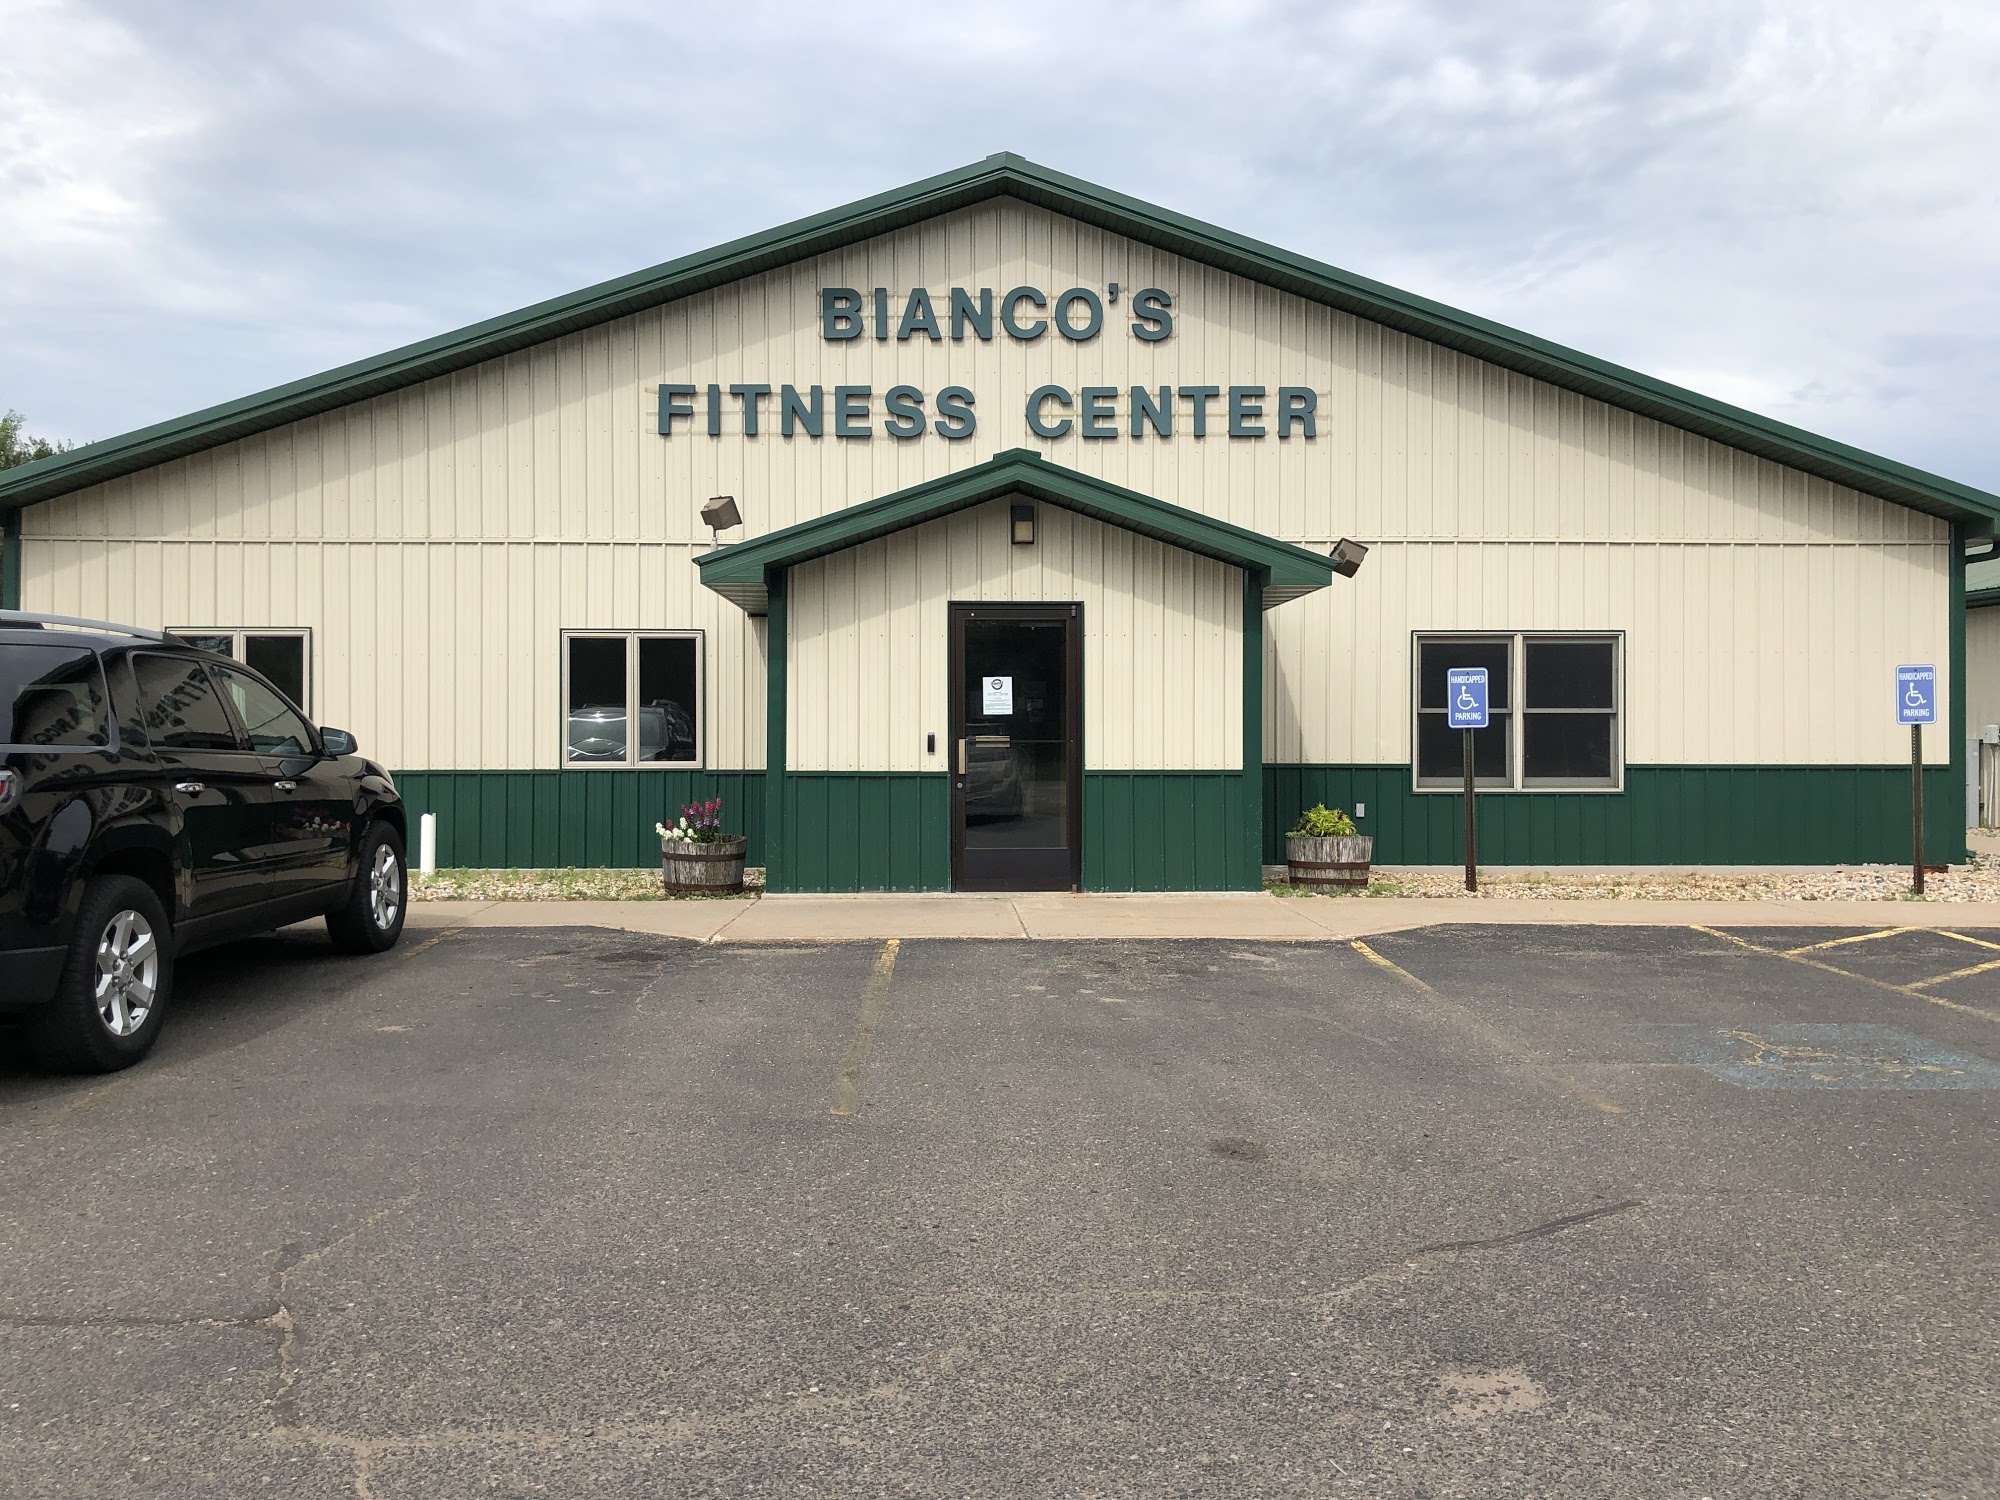 Bianco's Fitness Center